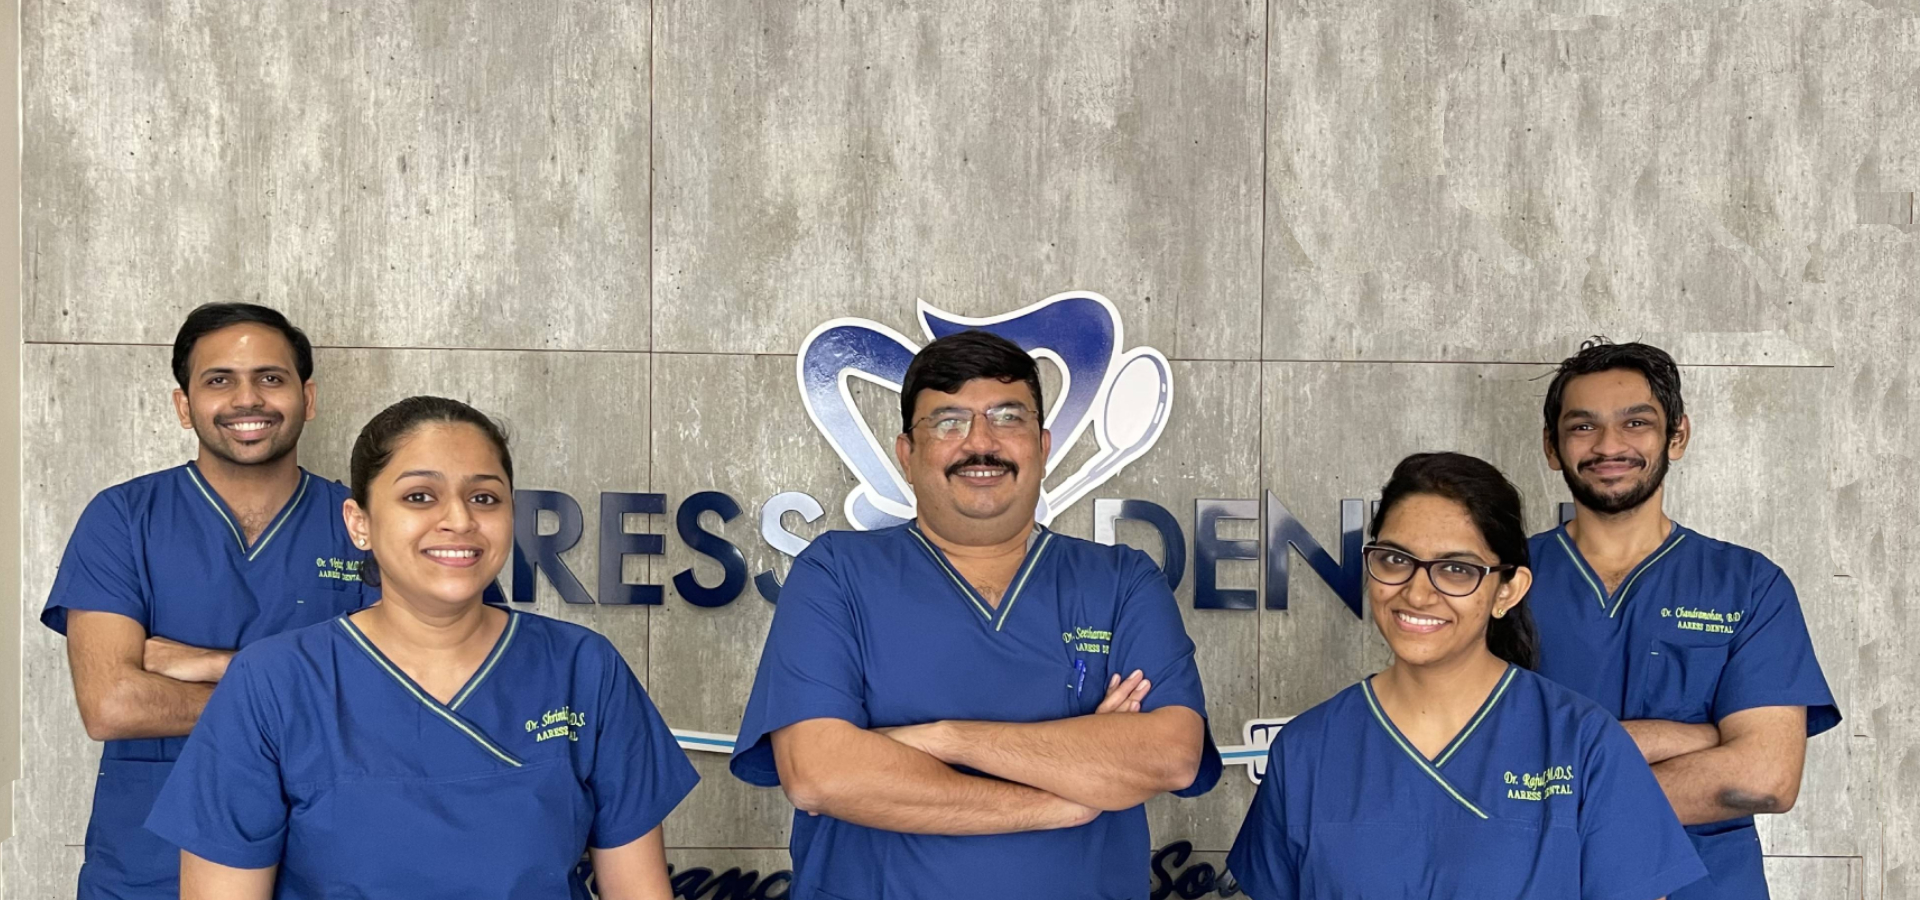 aaress dental team